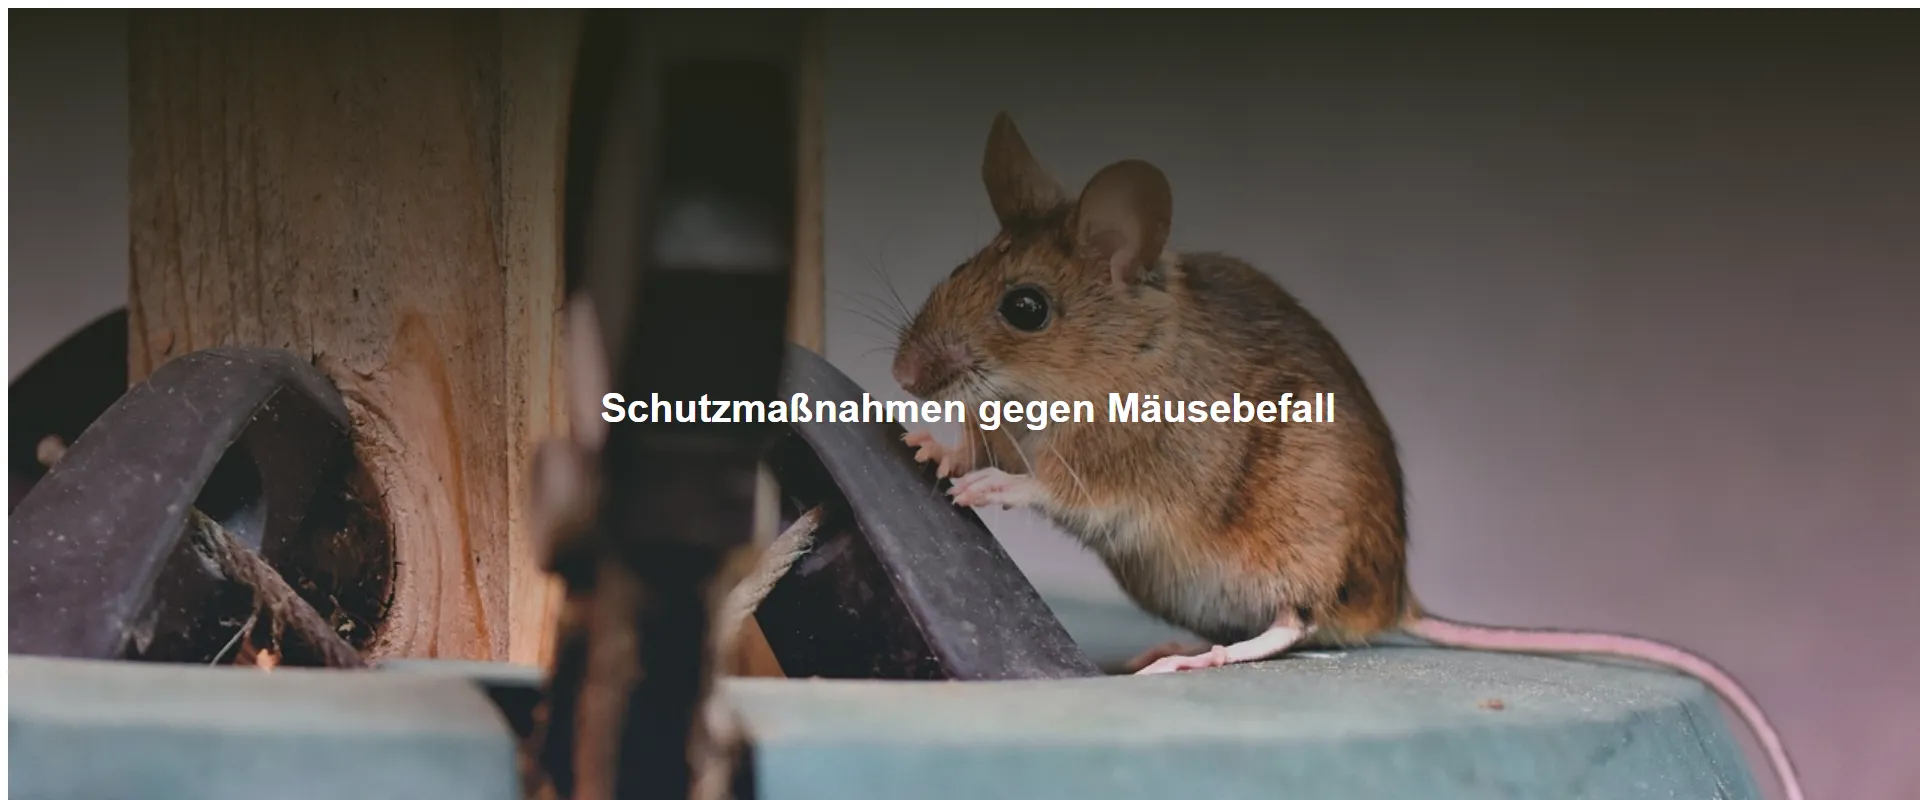 Schutzmaßnahmen gegen Mäusebefall